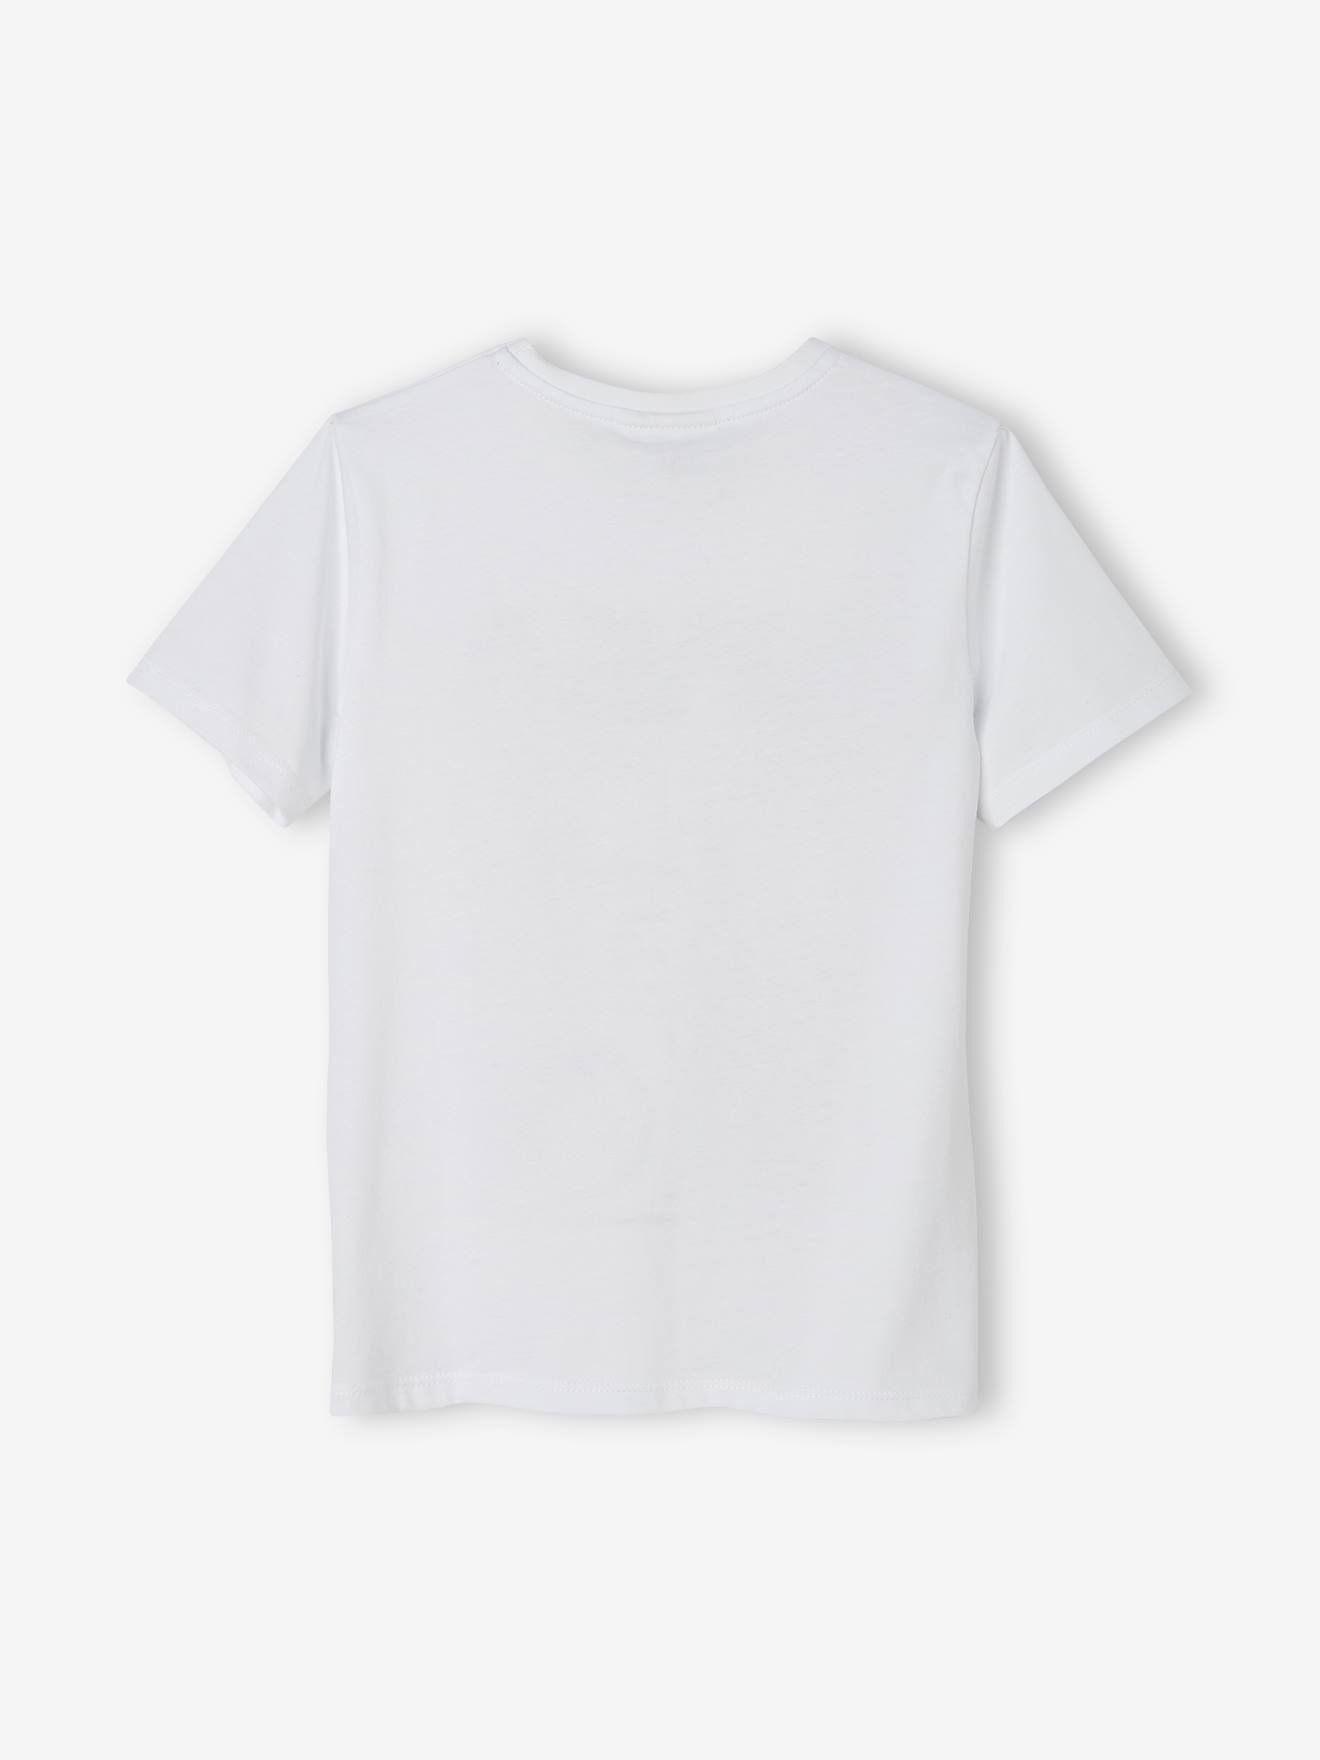 NASA® for Boys Boys - T-Shirt white,